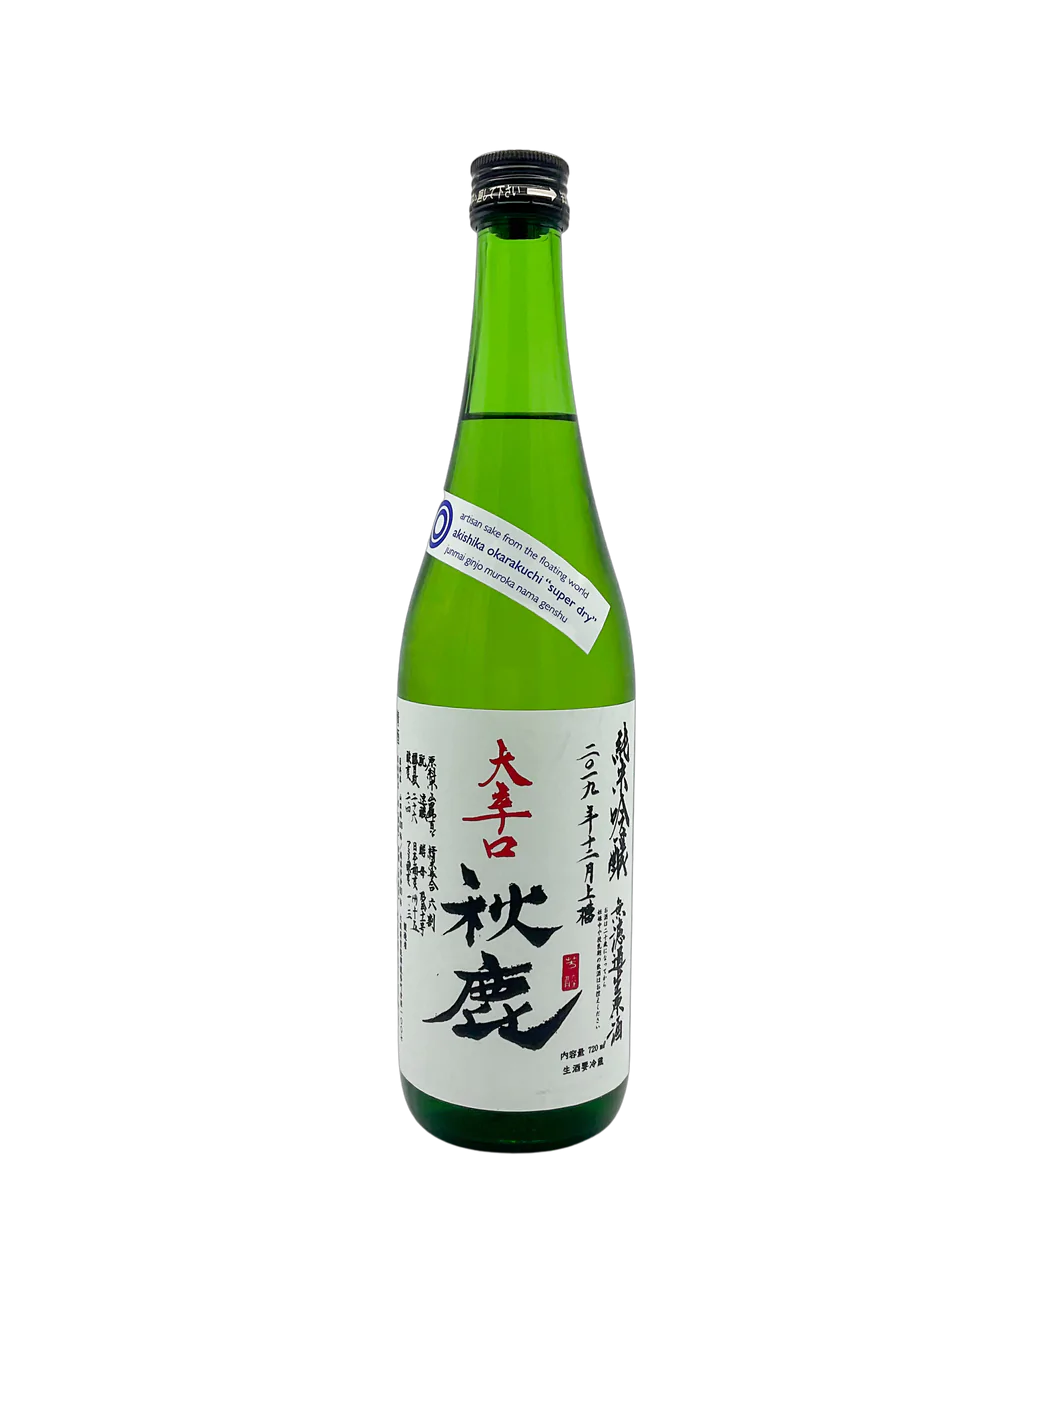 Akishika Okarakuchi "Super Dry" Junmai Ginjo Muroka Nama Genshu